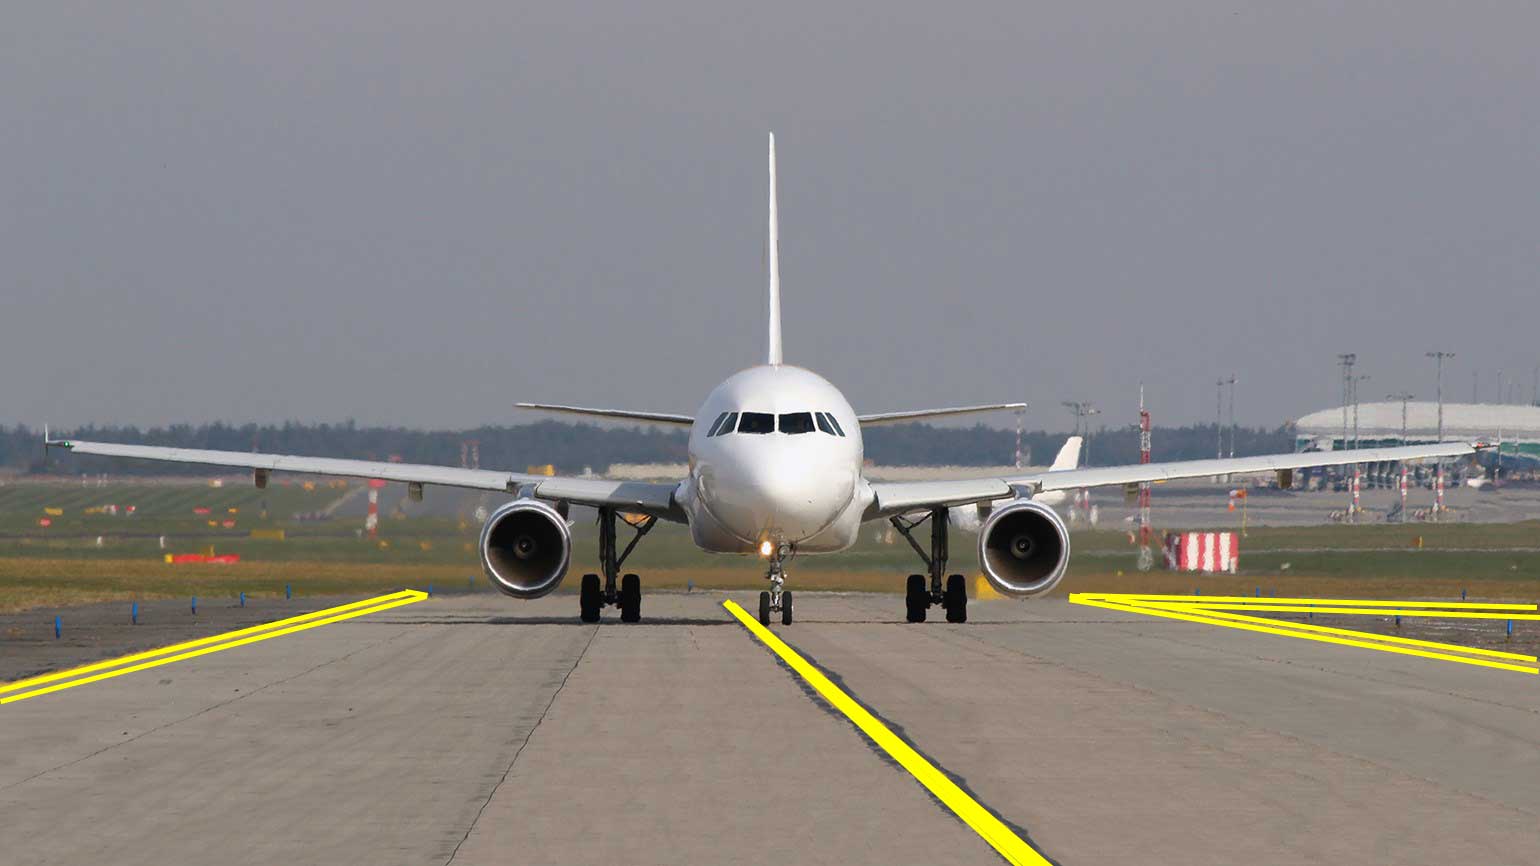 Yellow lanes pertain to aircraft